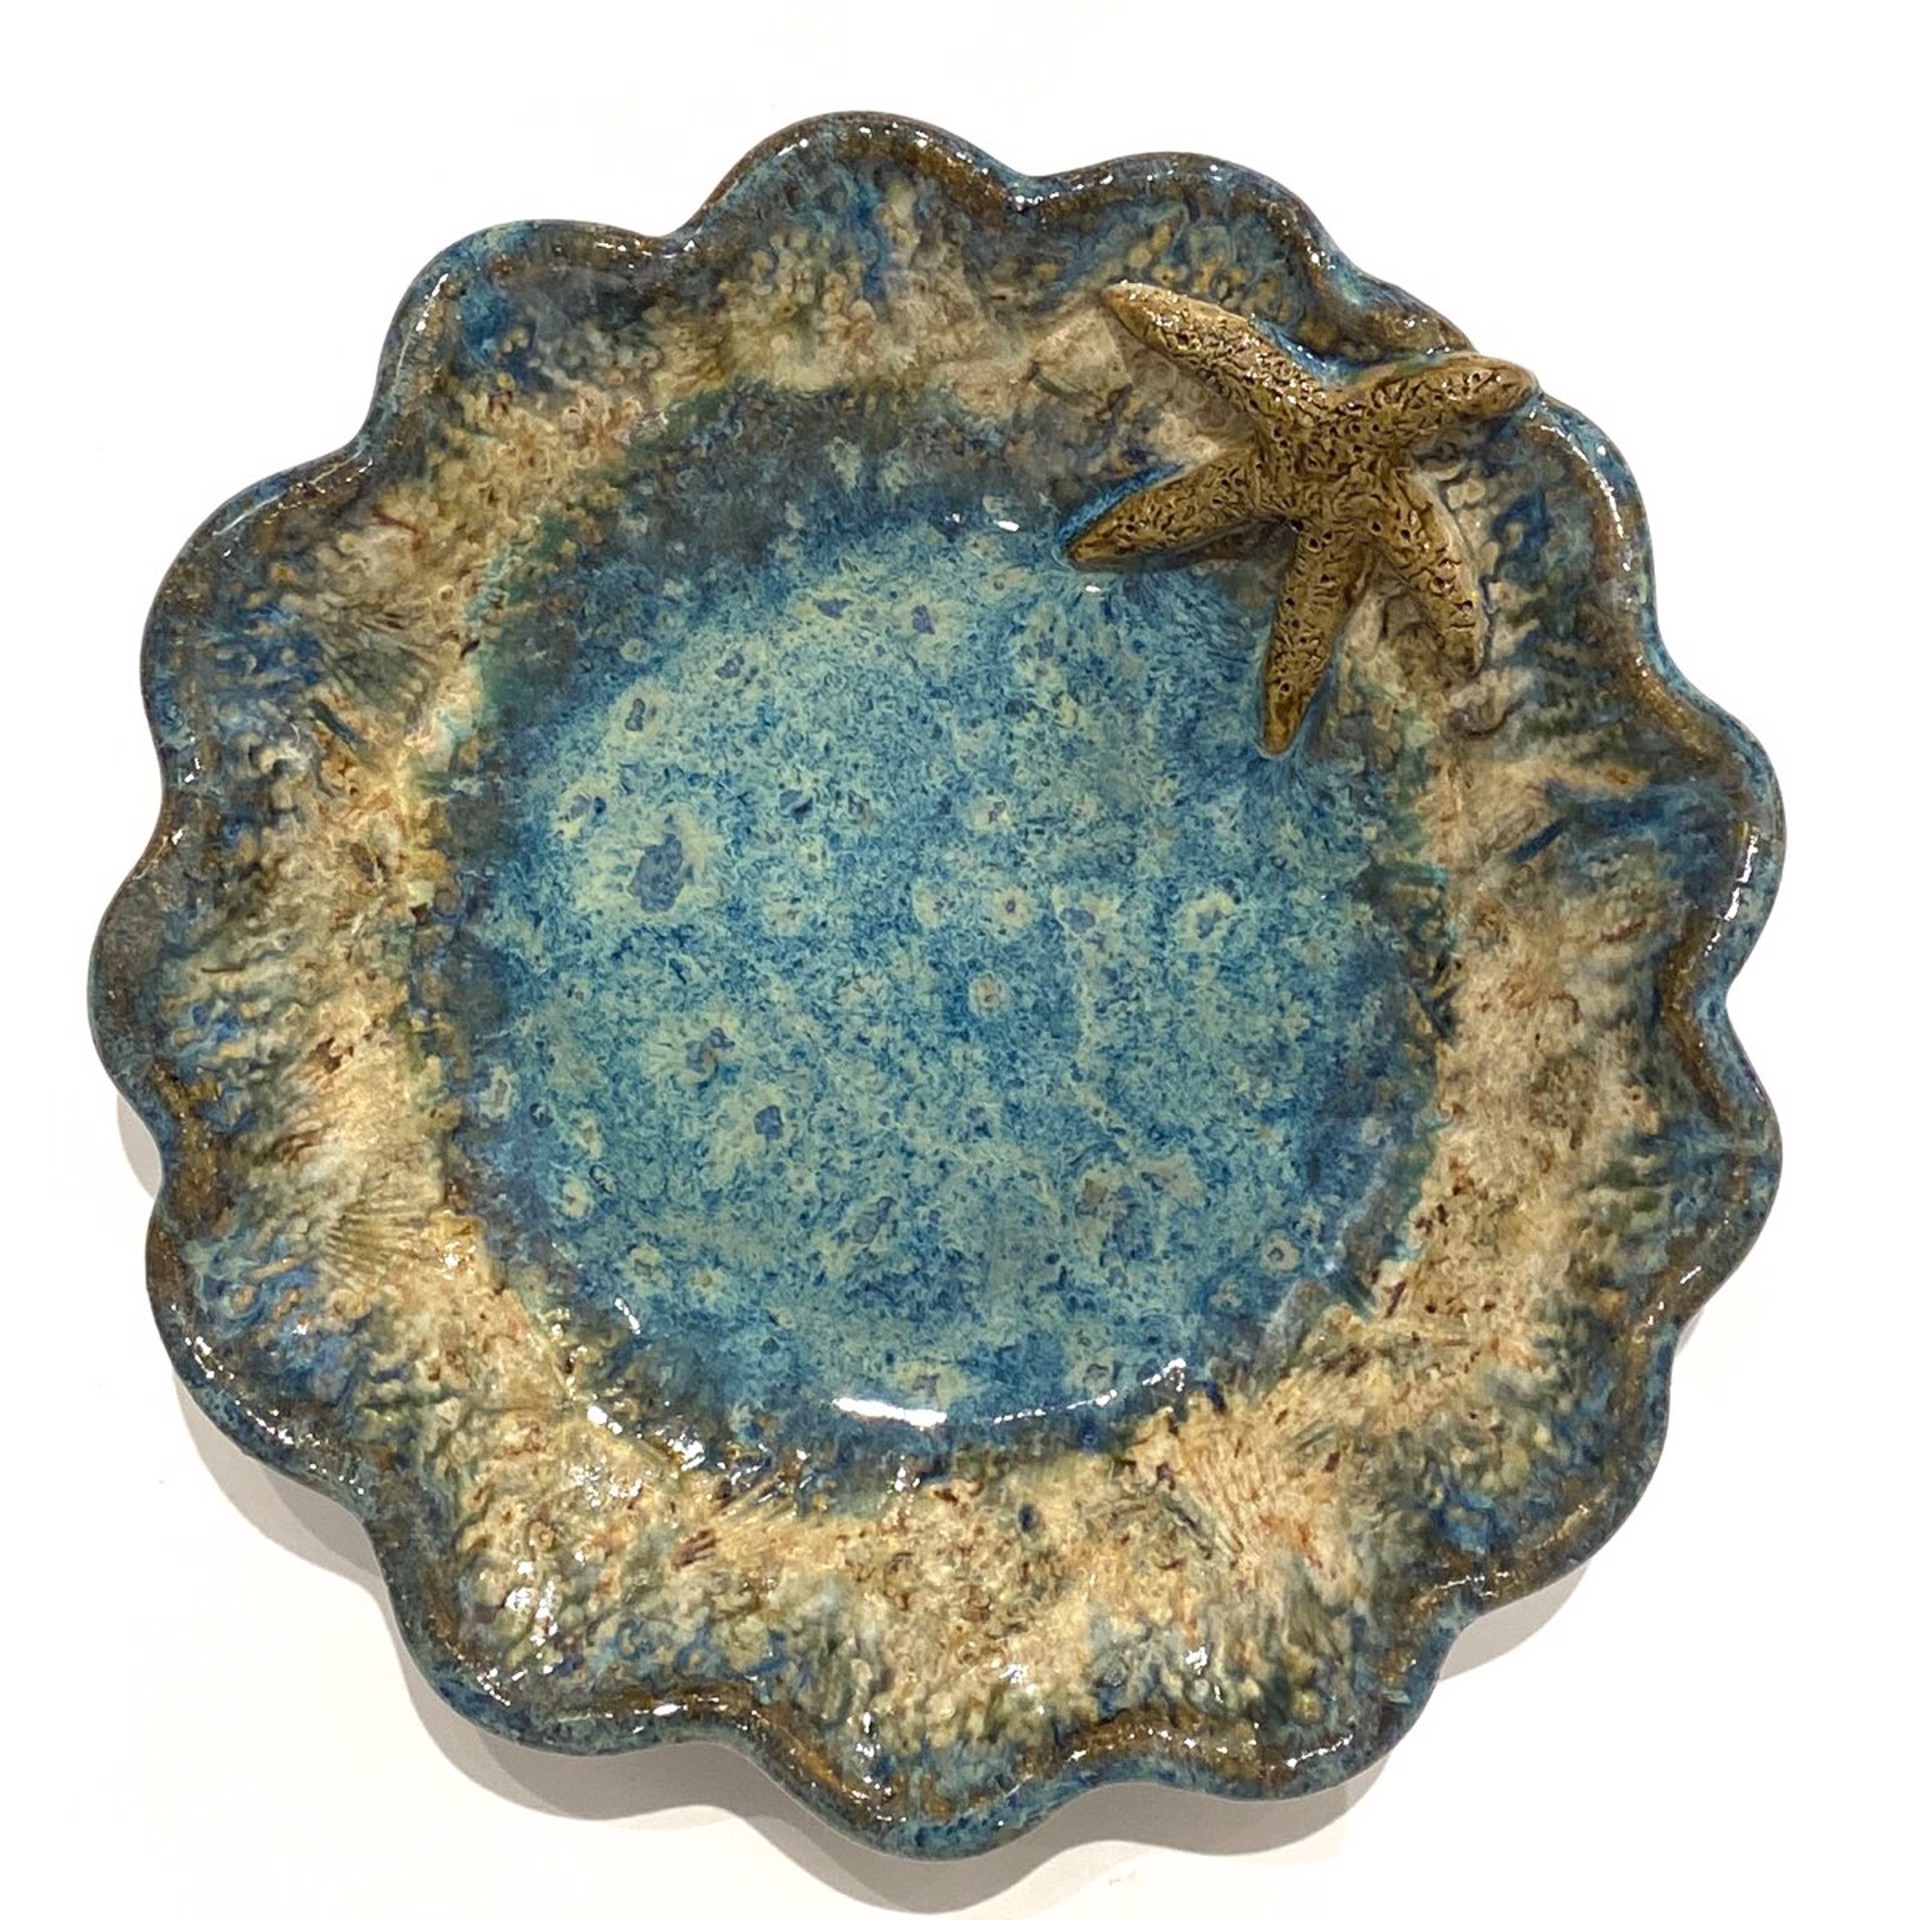 LG23-973 Small Round Scalloped Bowl with Starfish (Blue Glaze) by Jim & Steffi Logan